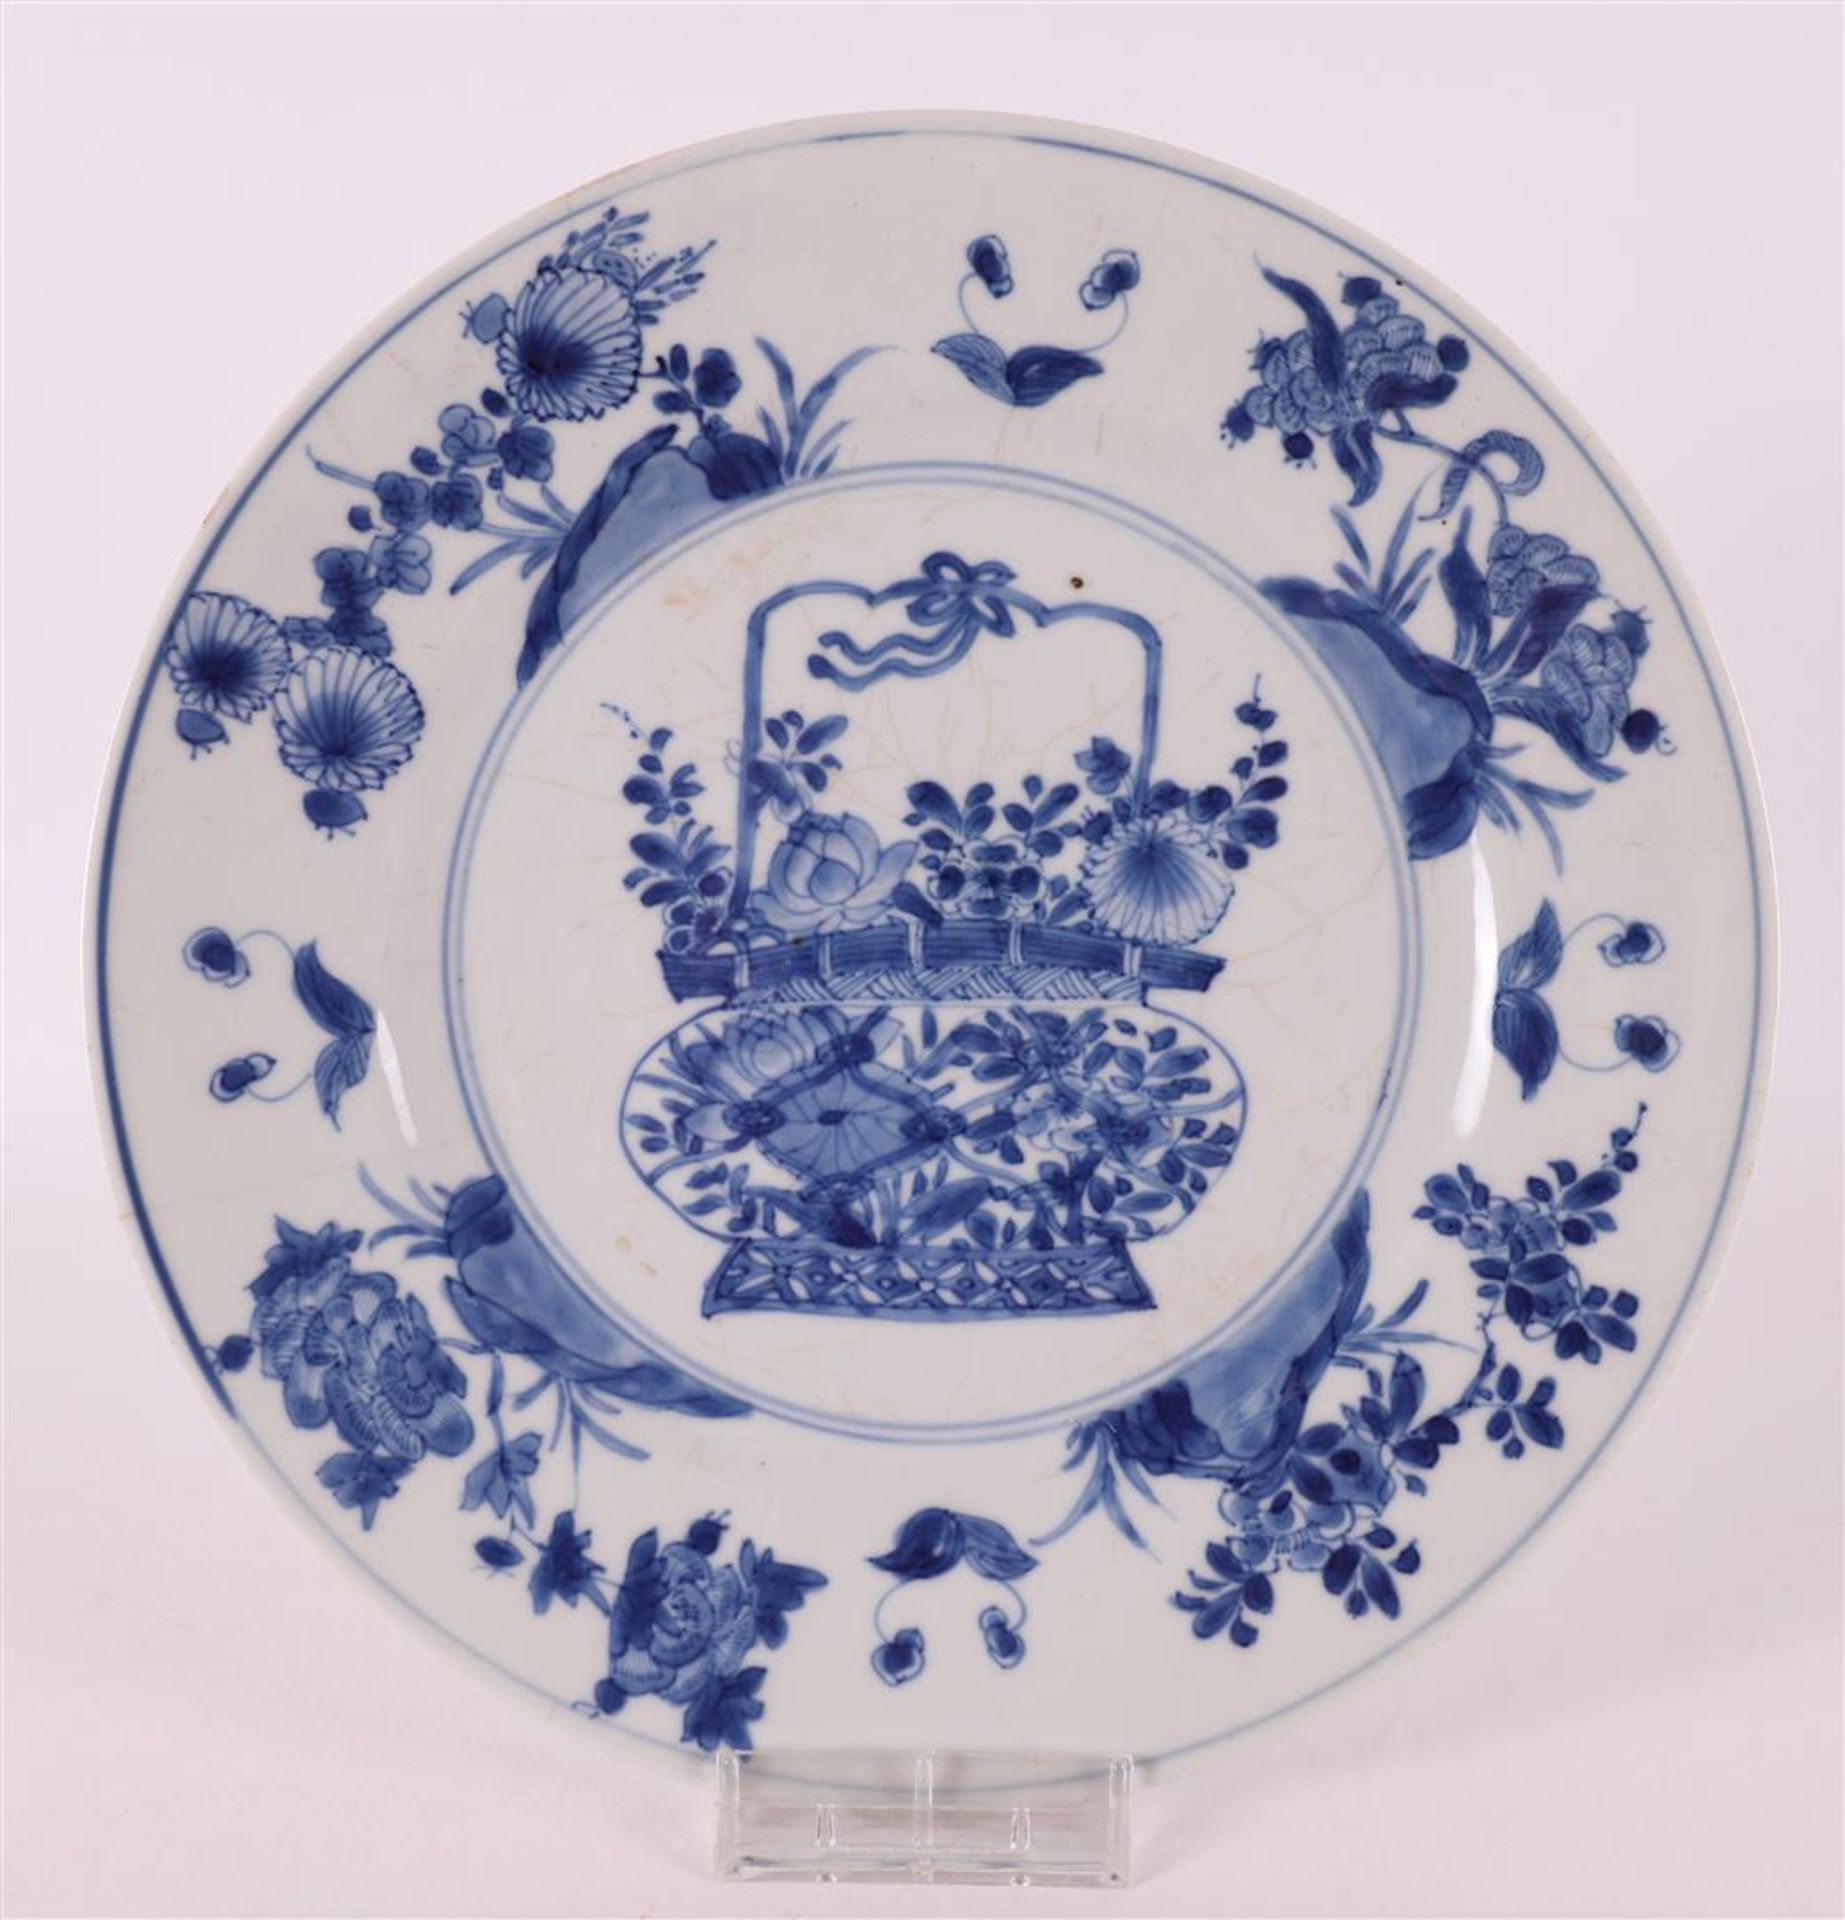 A blue/white porcelain dish, China, Kangxi, around 1700.